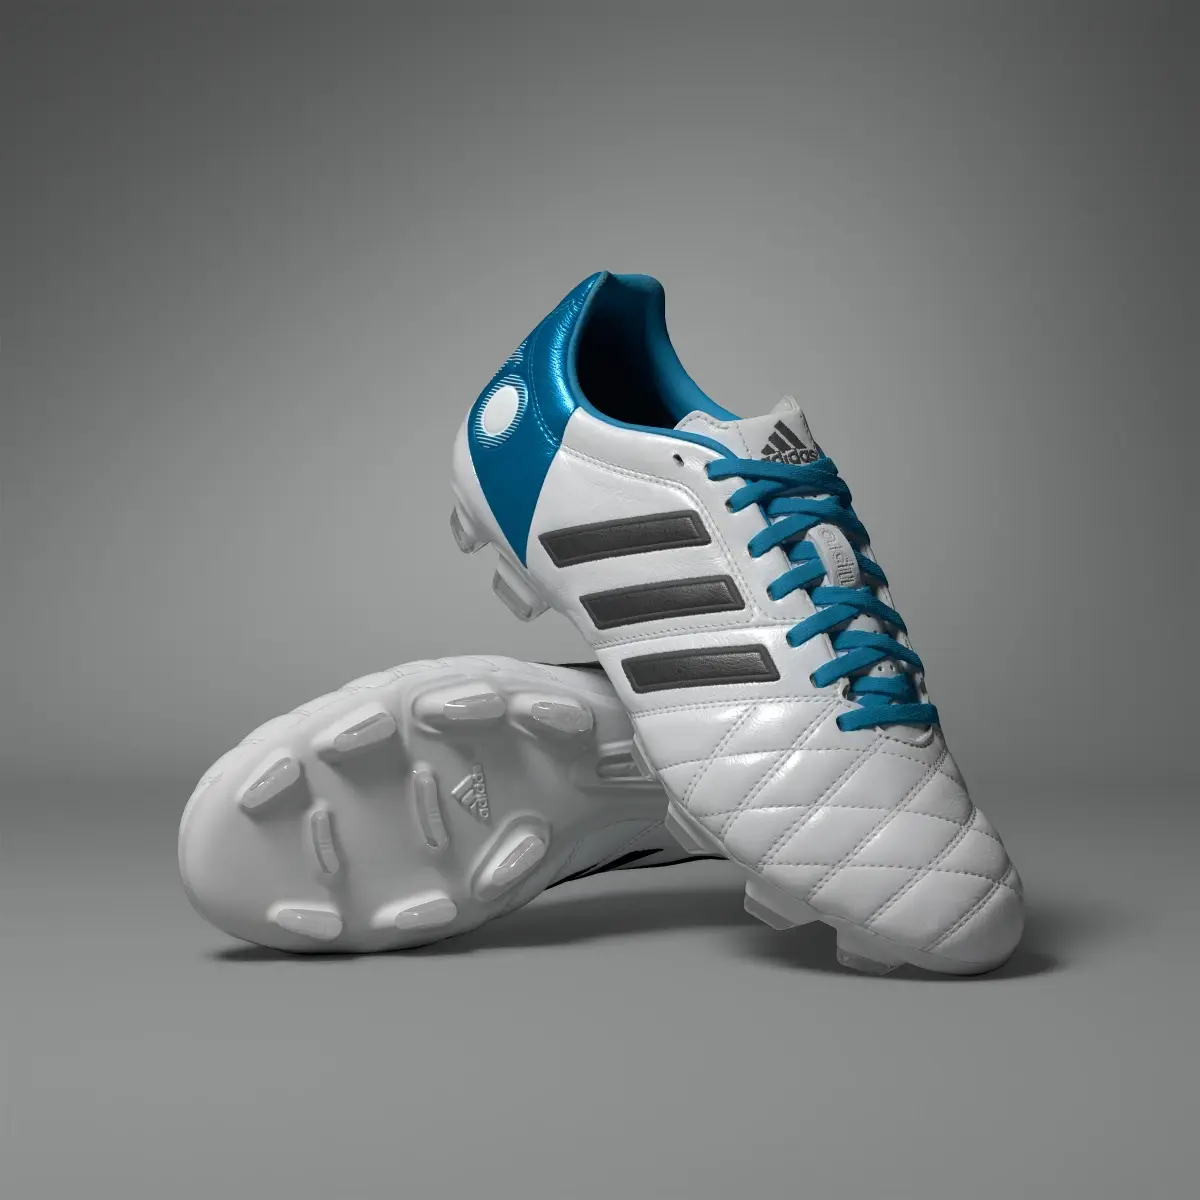 Adidas Botas de Futebol 11Pro Toni Kroos – Piso firme. 1